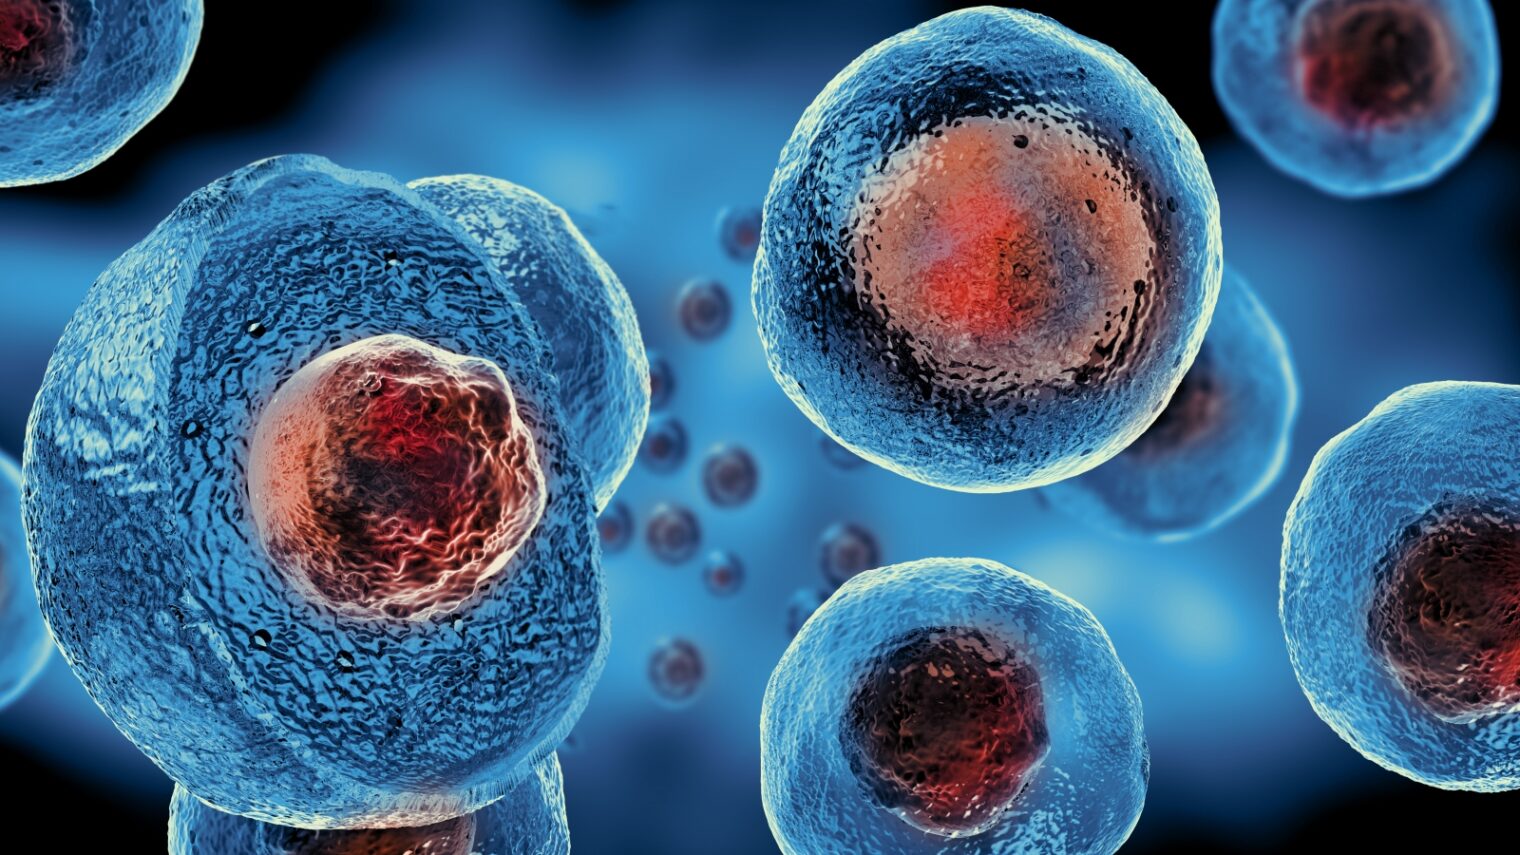 Embryonic stem cells. (Credit: Giovanni Cancemi via shutterstock.com)